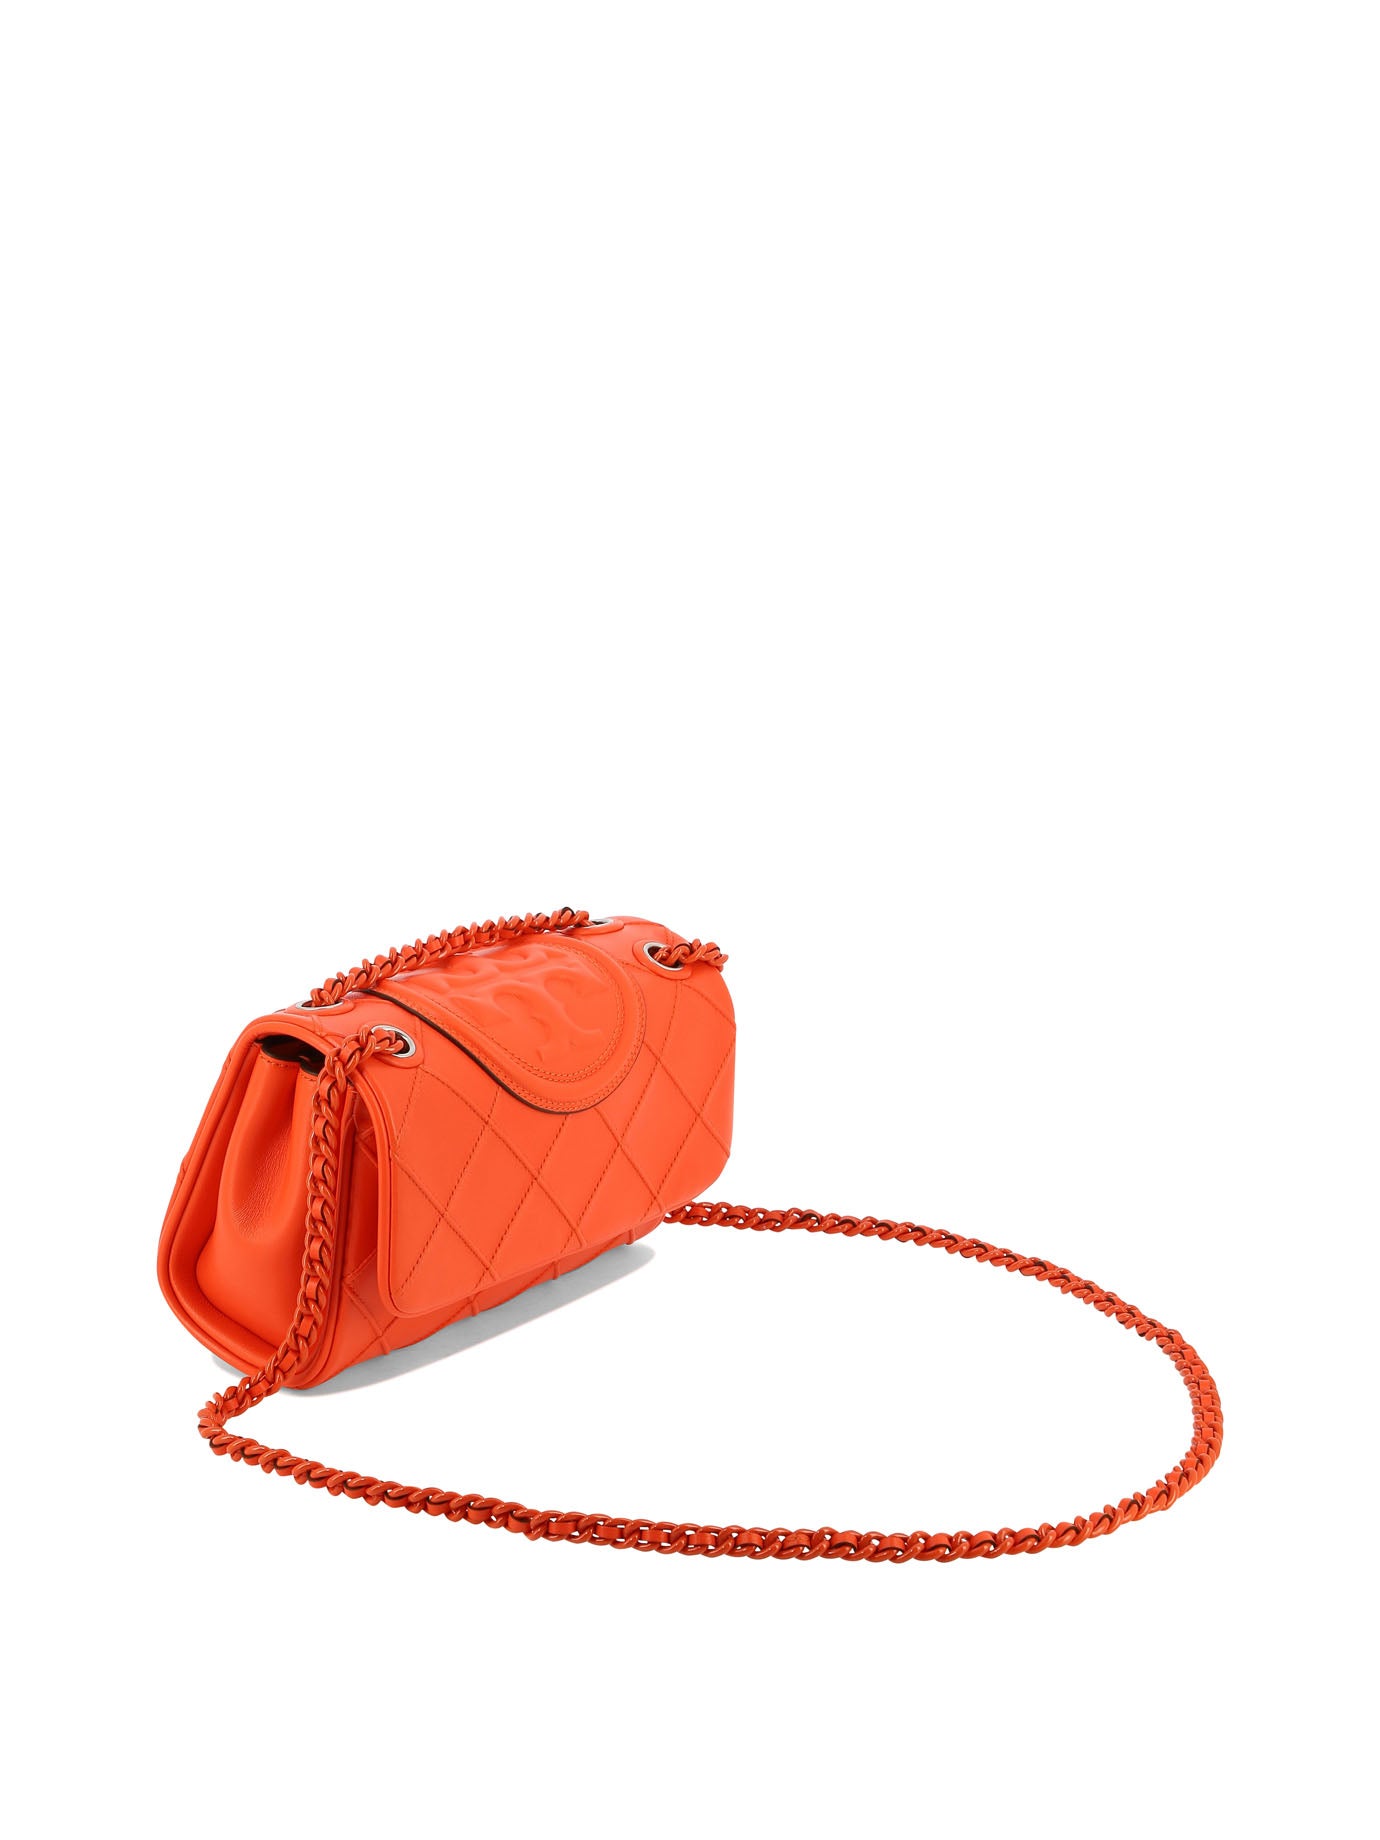 Tory Burch Fleming Soft Small Convertible Shoulder Bag